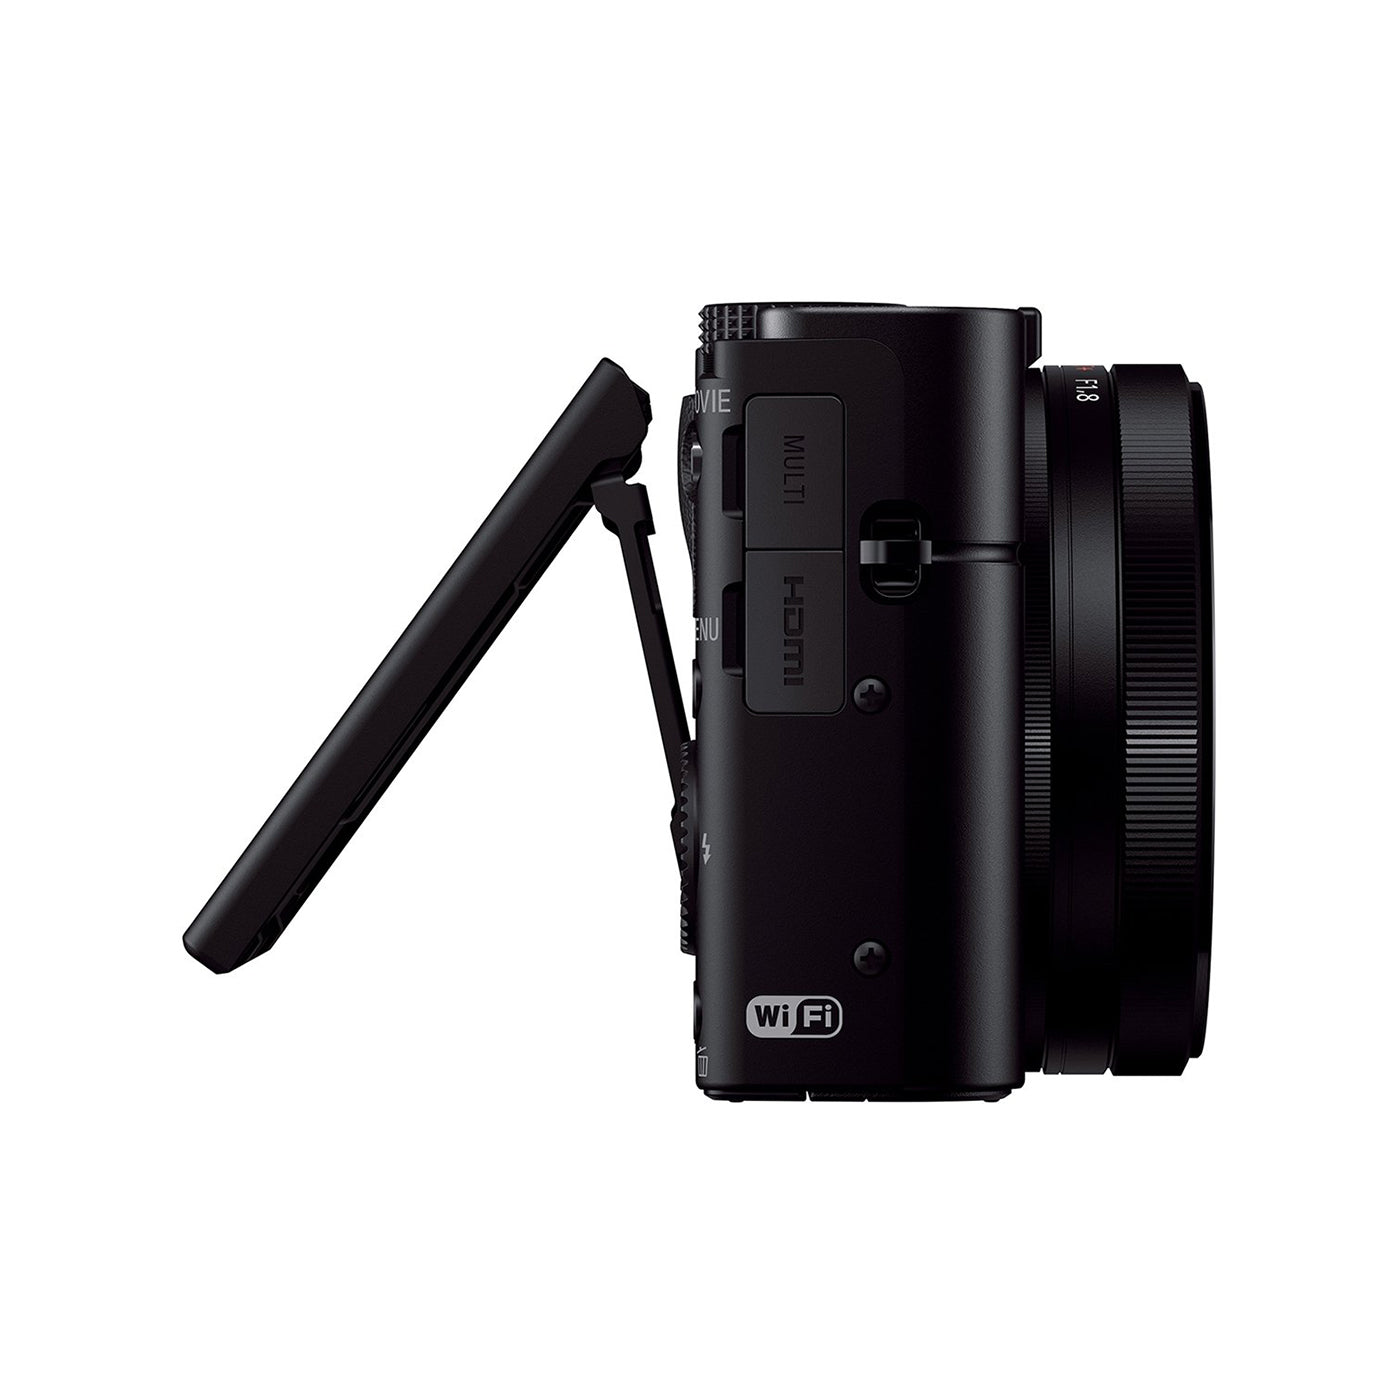 DSC-RX100 III Advanced Camera with 1.0-type sensor